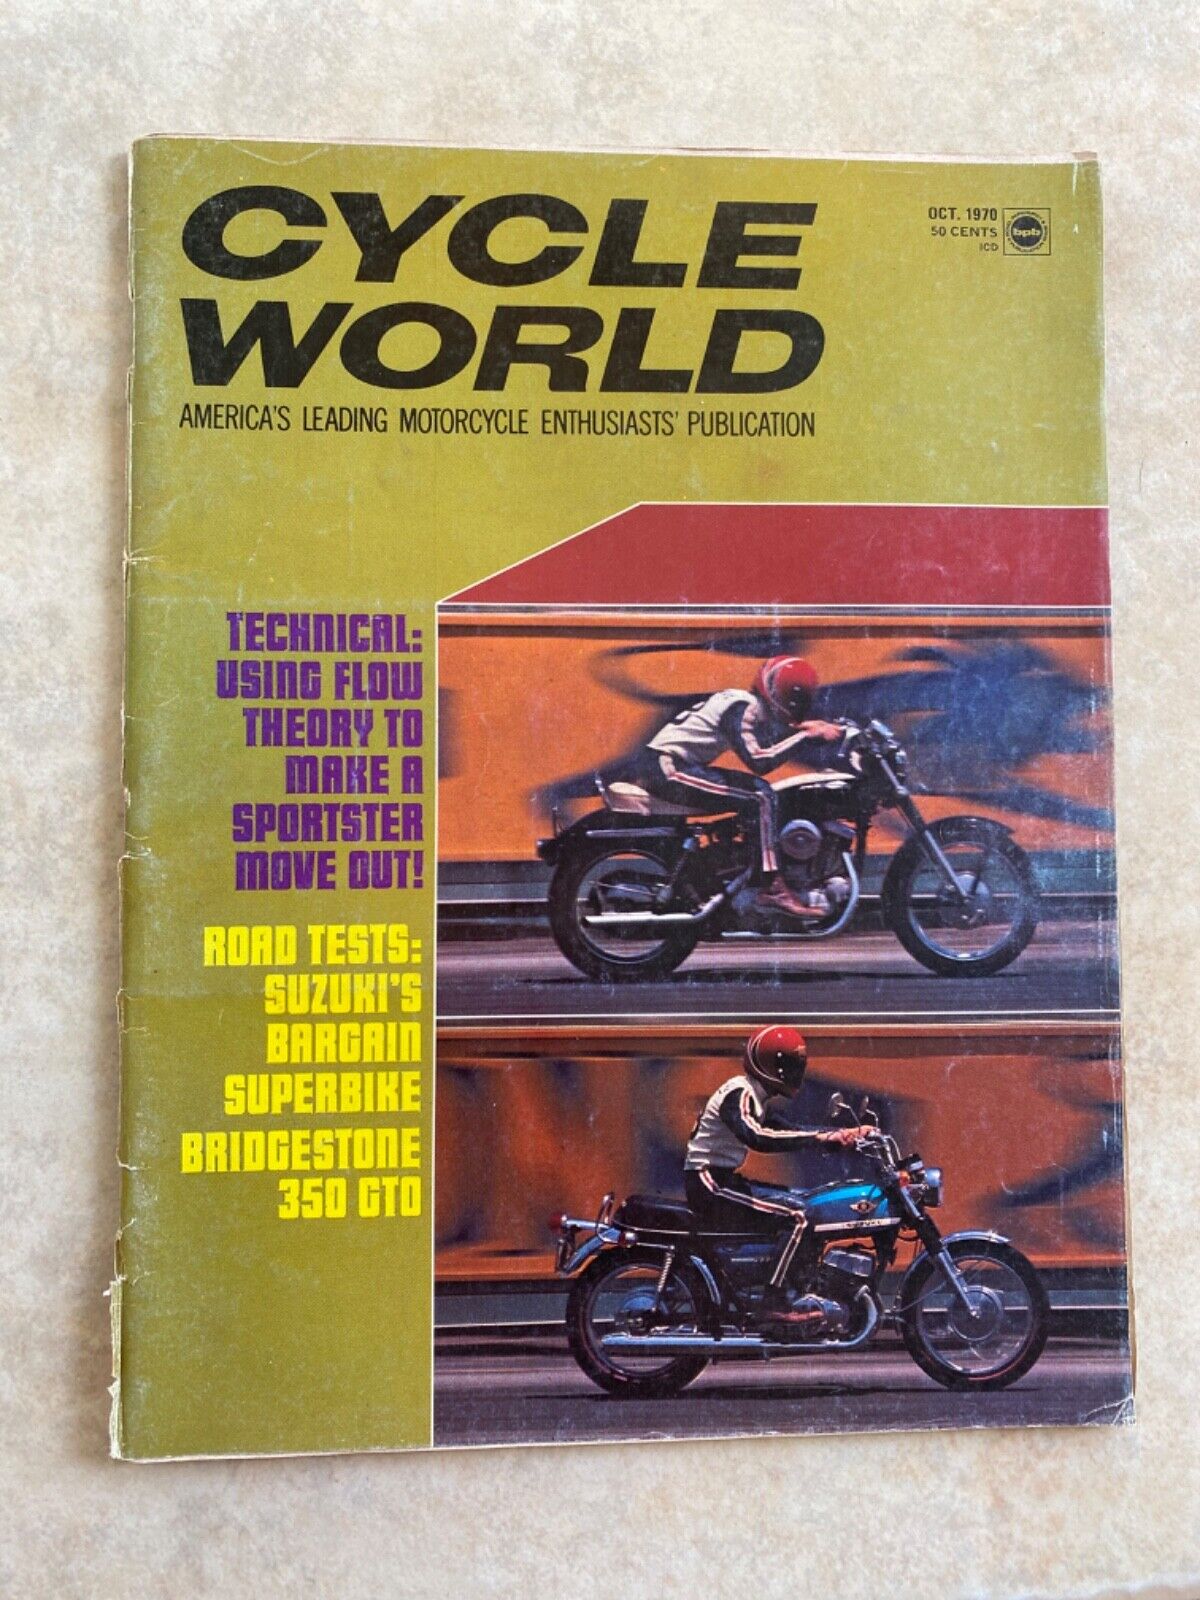 Vintage cycle world magazine, October 1970 America's leading motorcycle enthusia